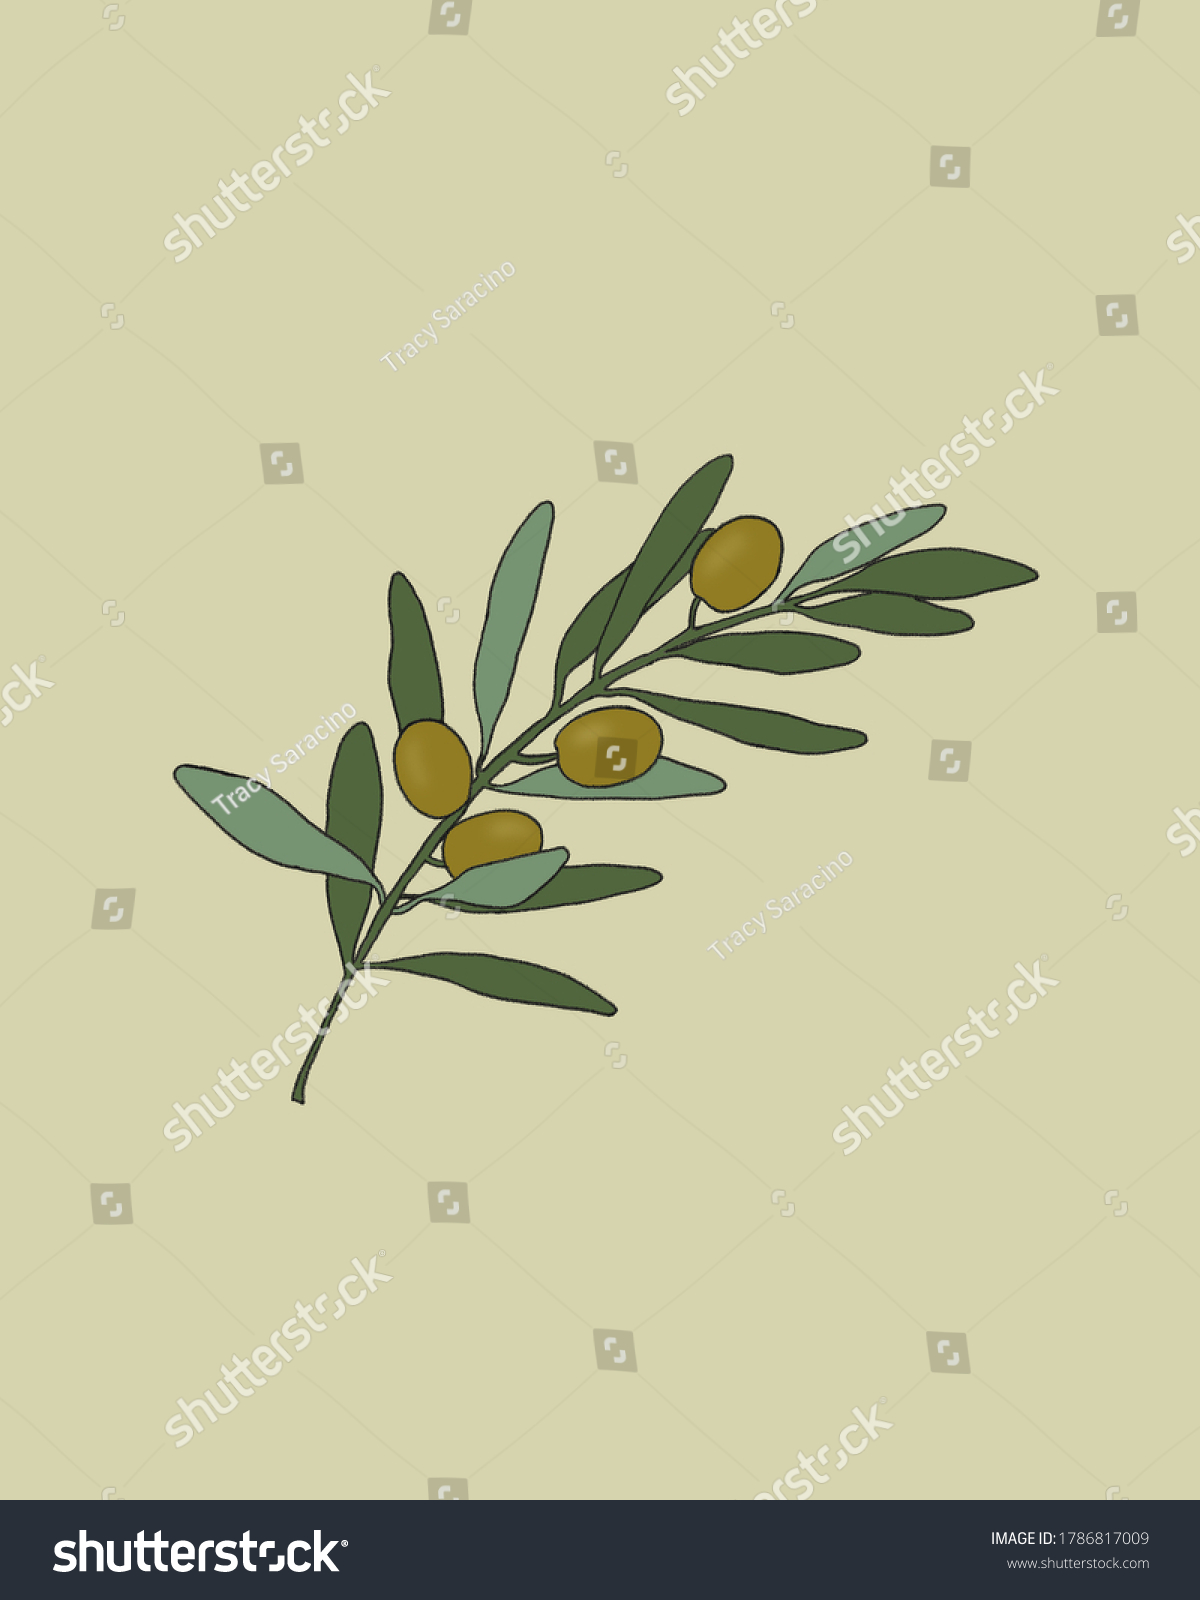 Olive Branch Green Peace Illustration Stock Illustration 1786817009 Shutterstock 